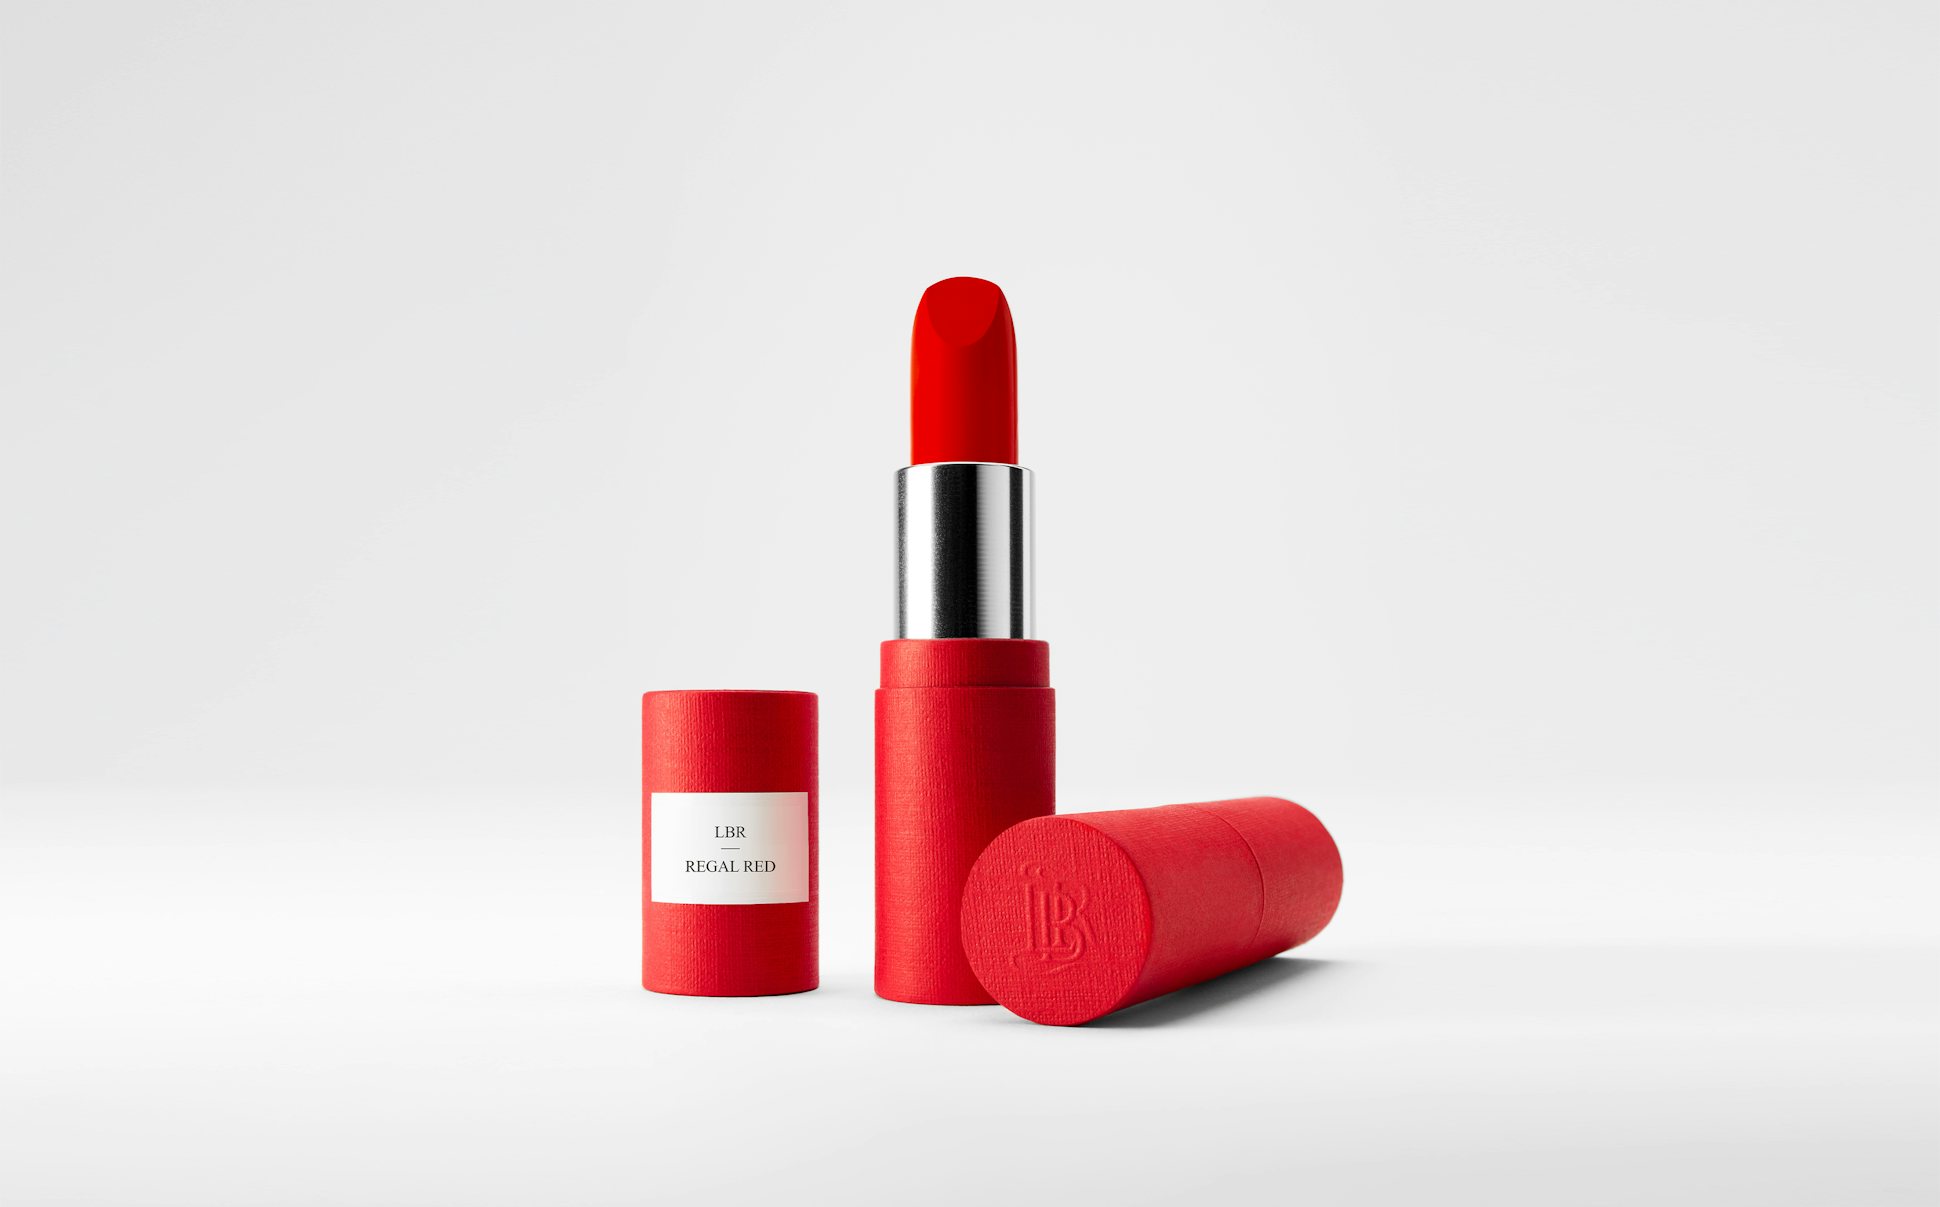 La bouche rouge Regal Red lipstick in the red paper case